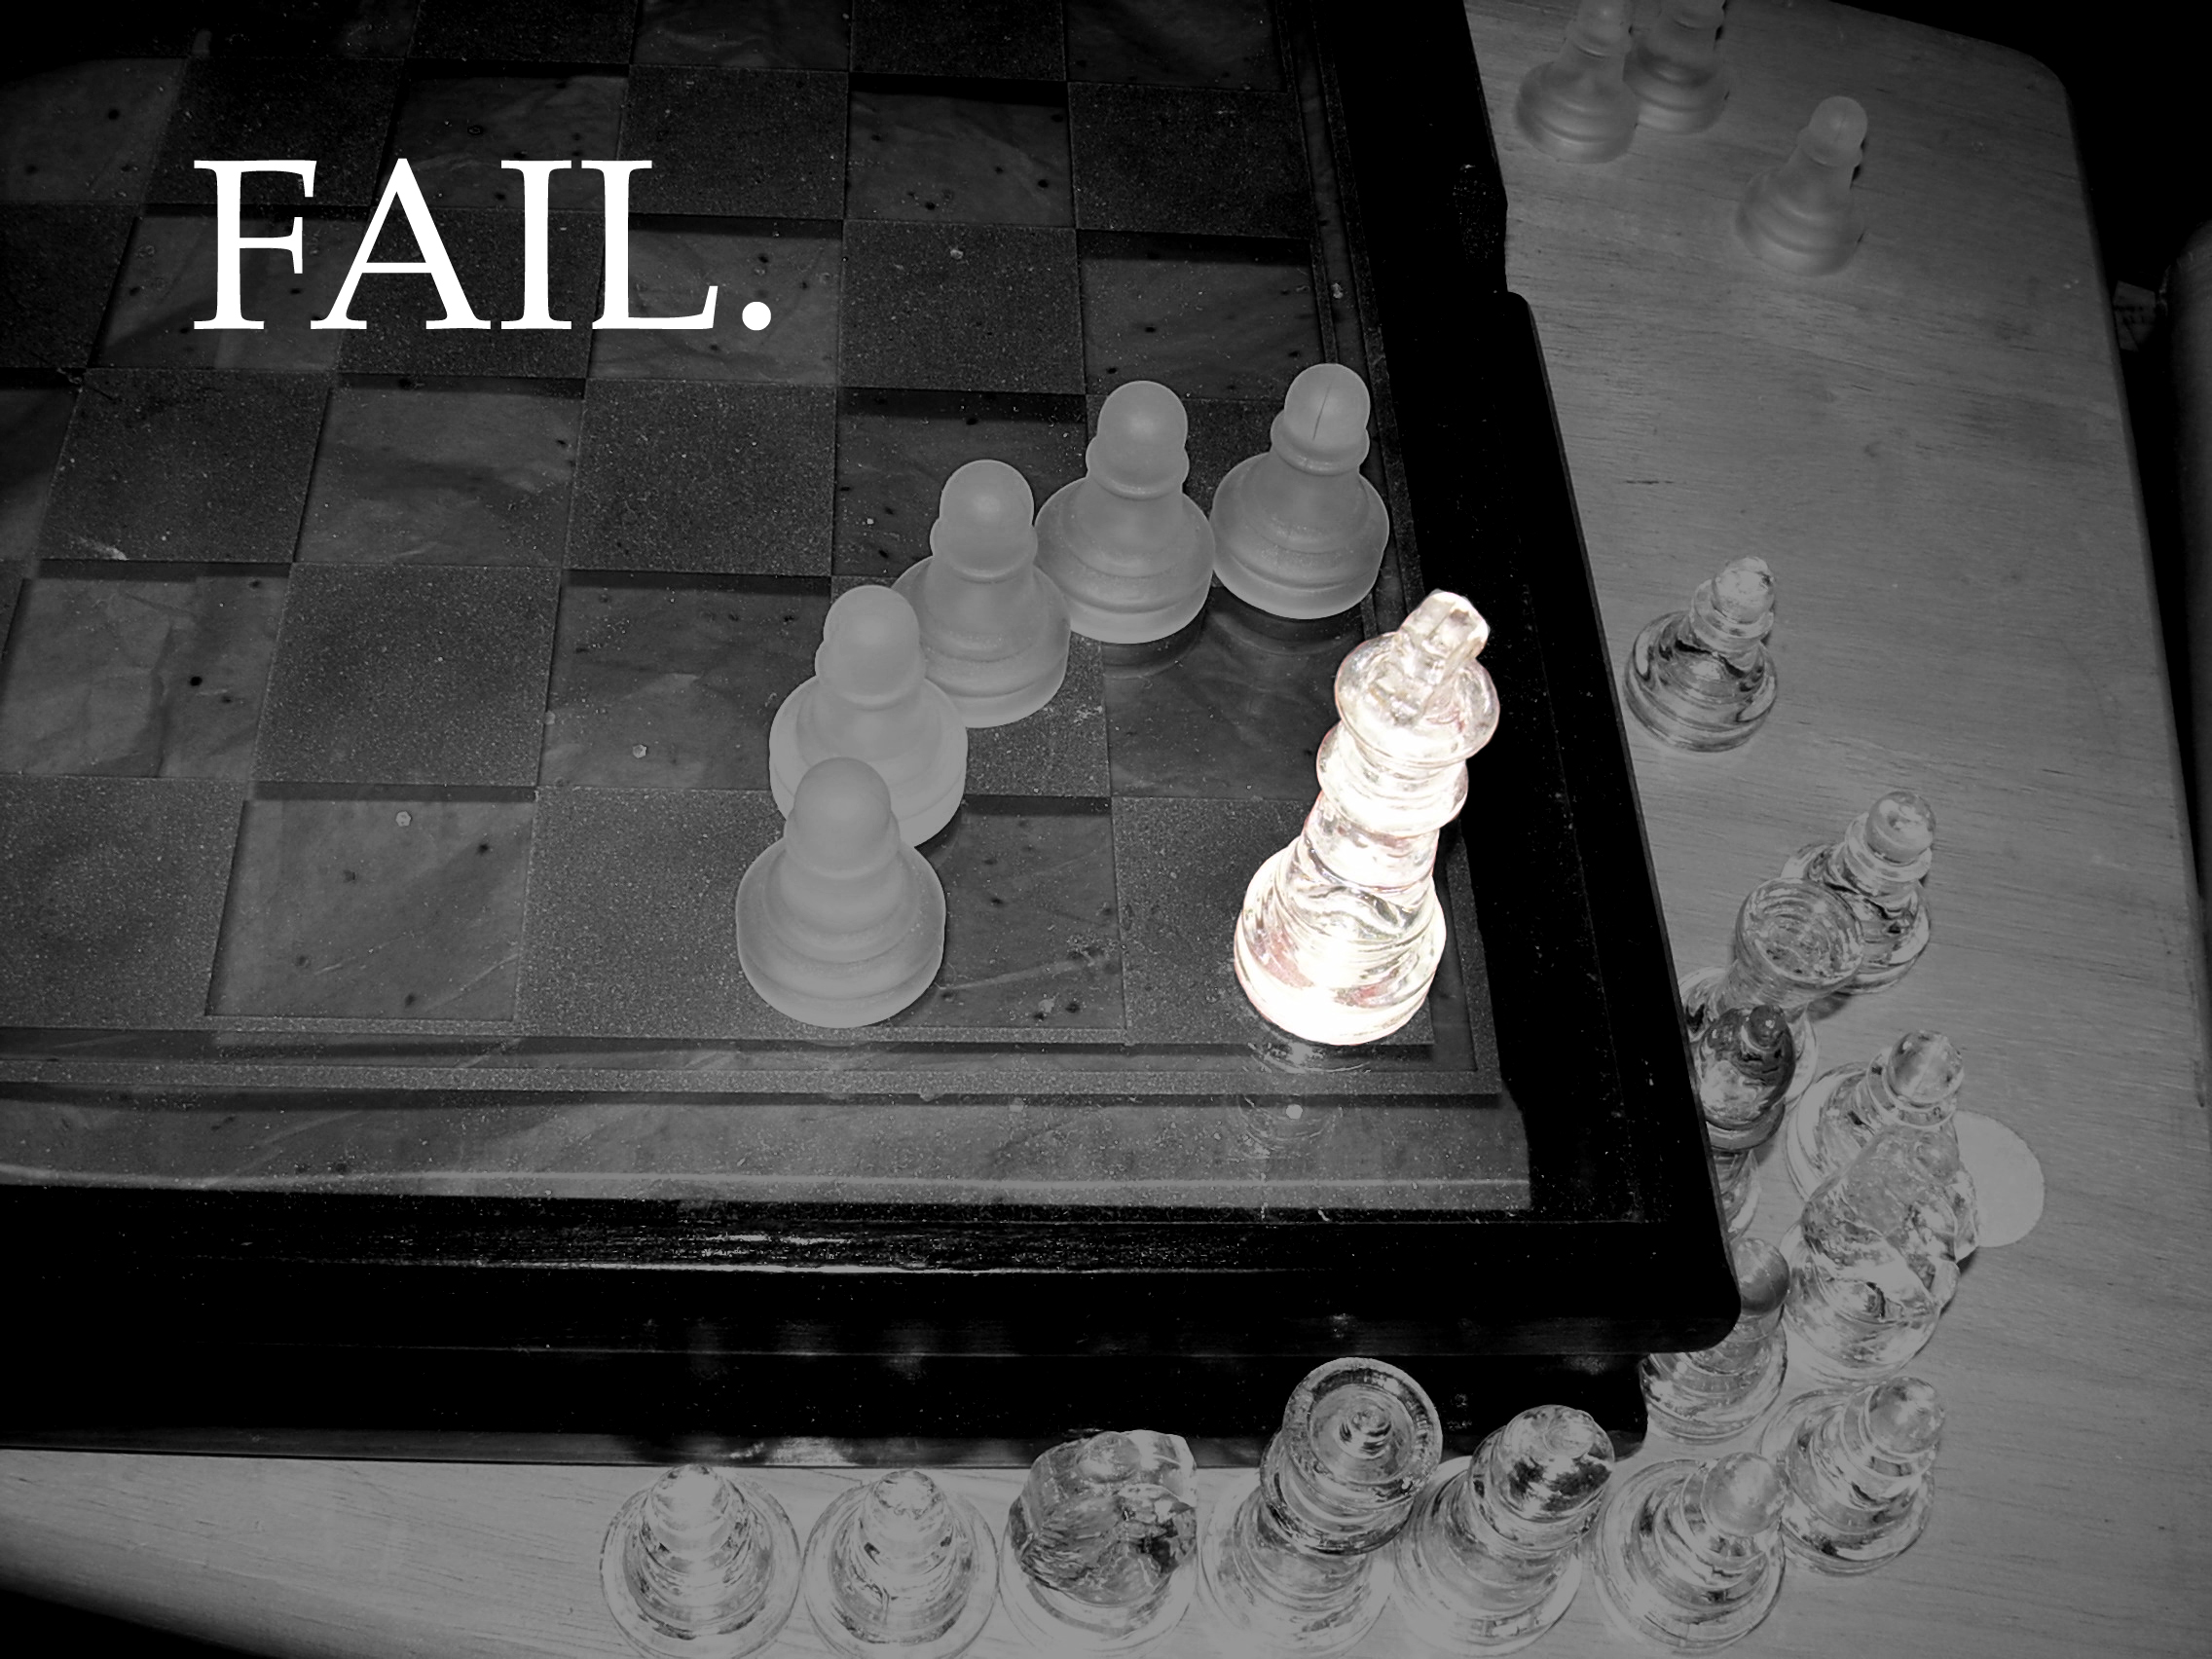 шахматы, провал - обои на рабочий стол